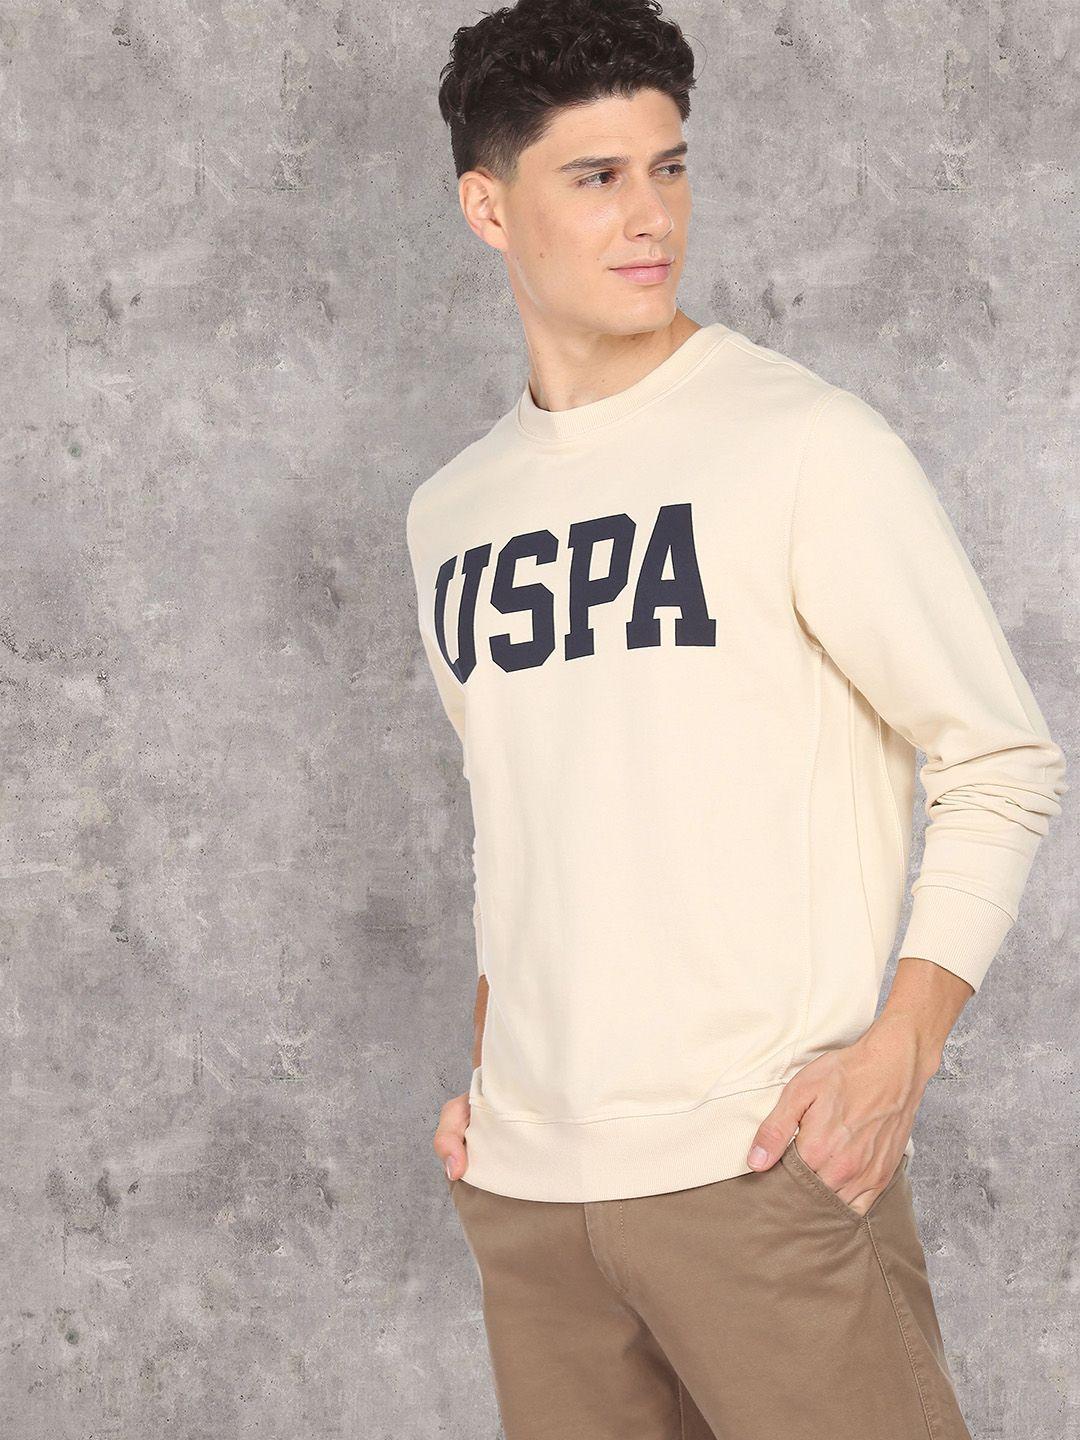 u-s-polo-assn-denim-co-men-beige-printed-cotton-sweatshirt